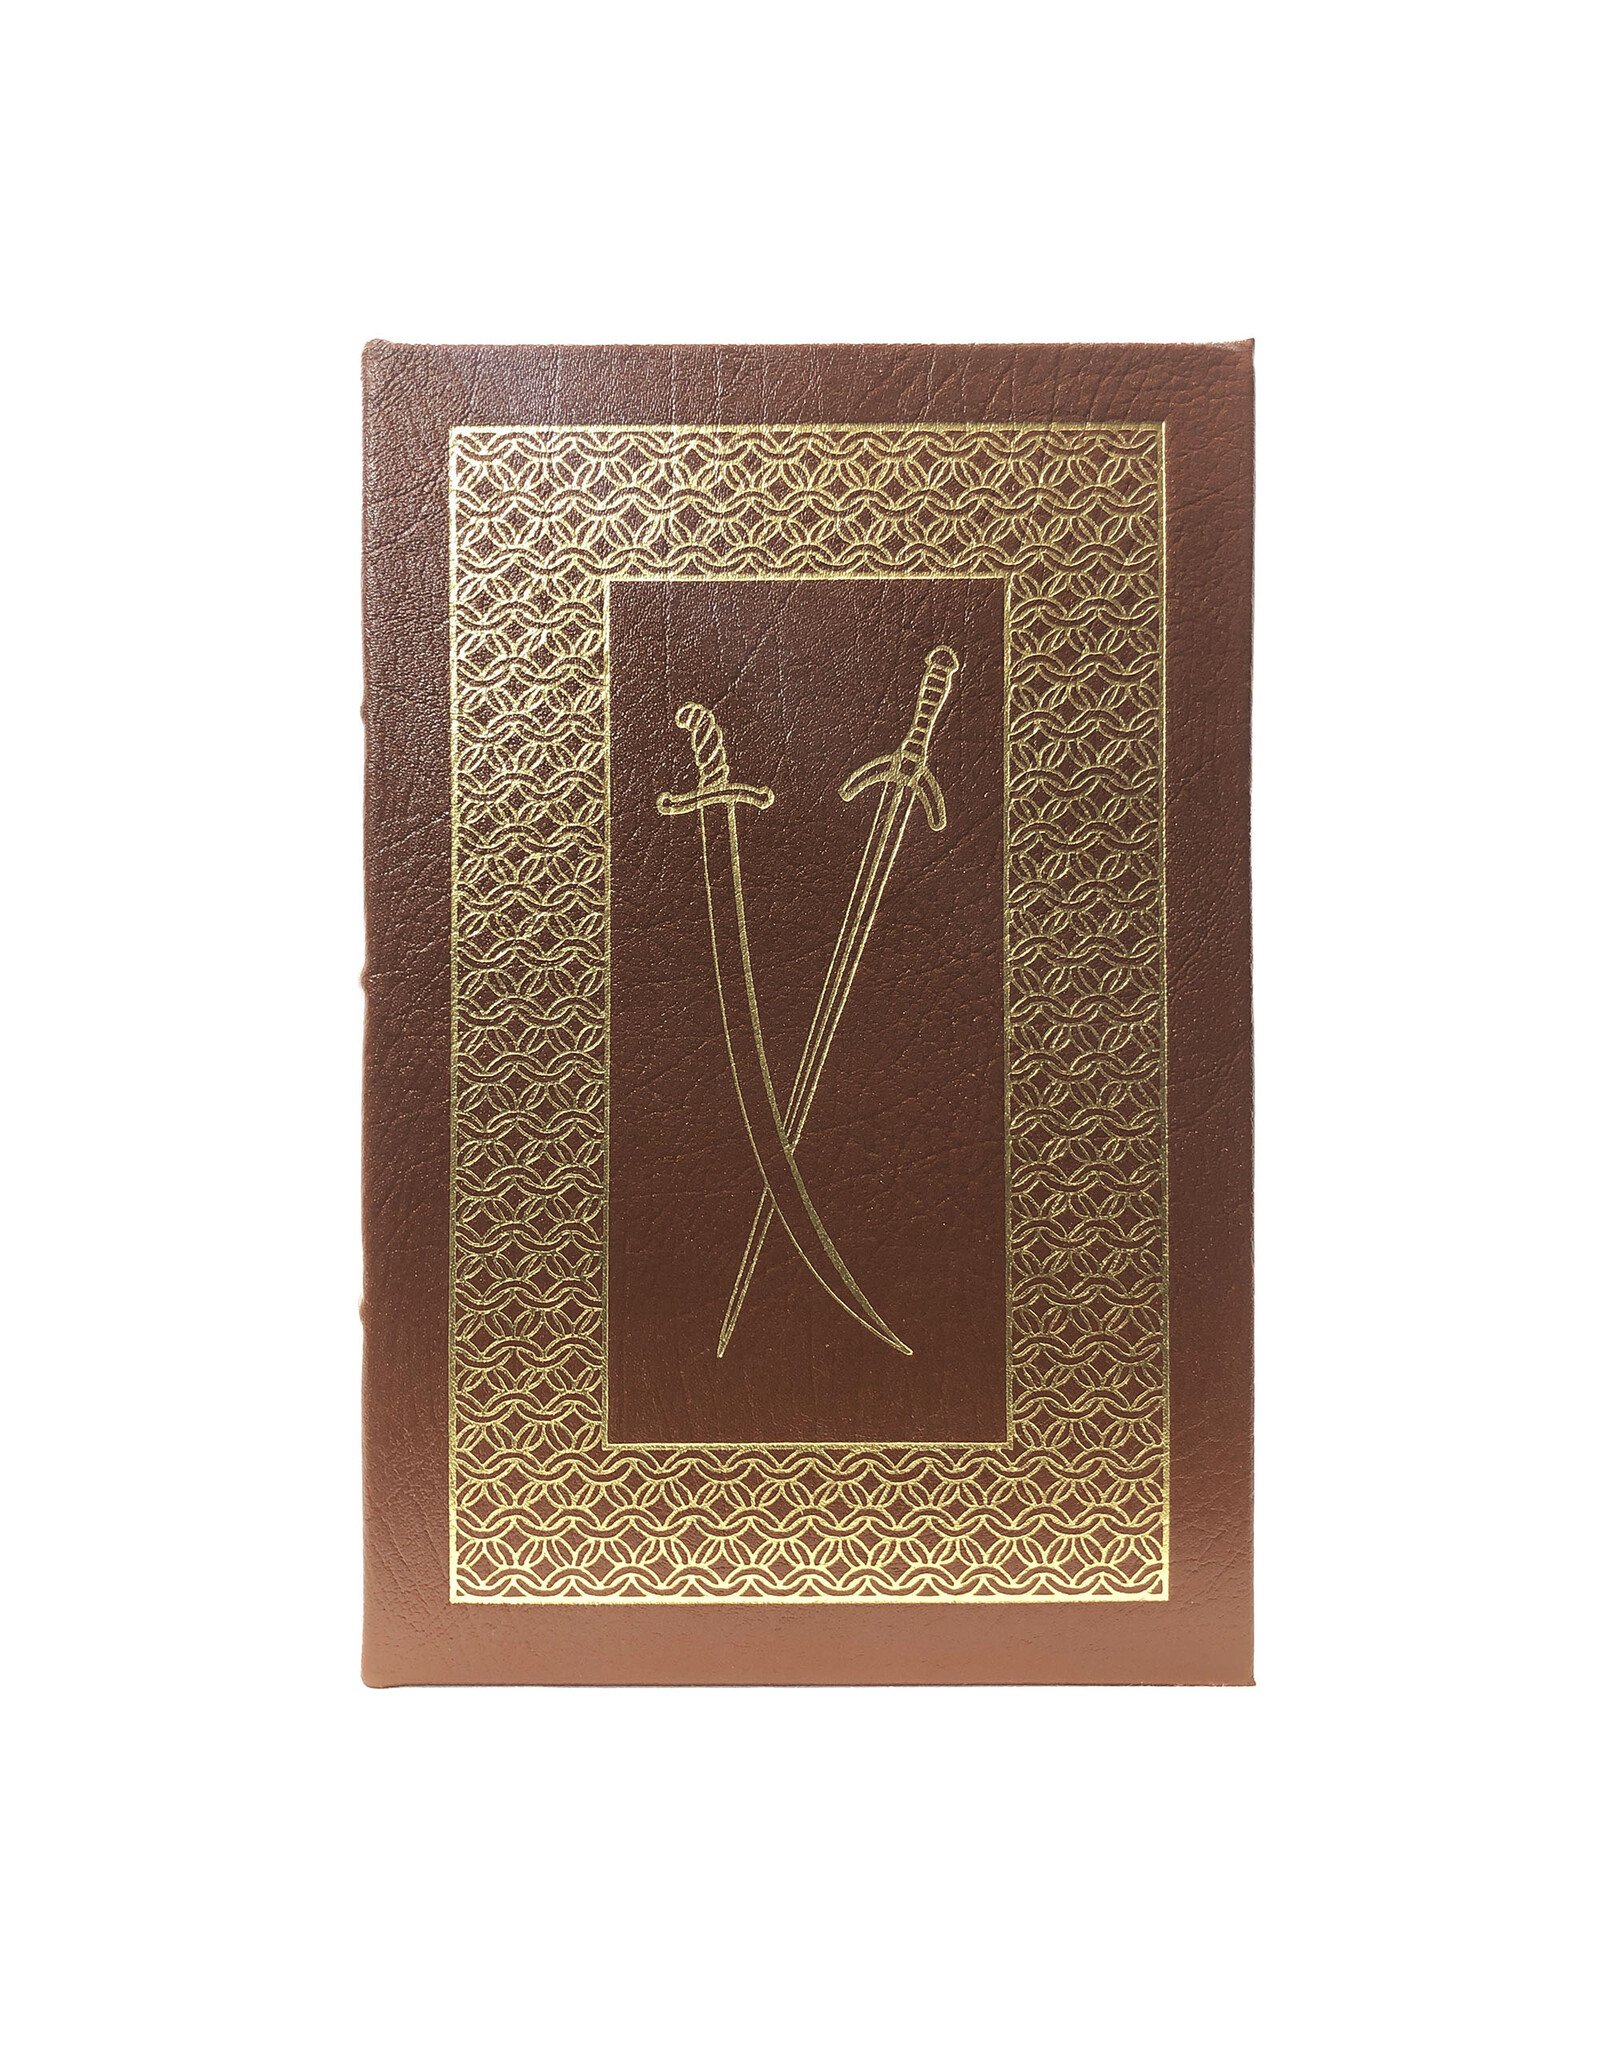 Easton Press Talisman 100 Greatest Books Ever Written Genuine Leather Collector's Edition